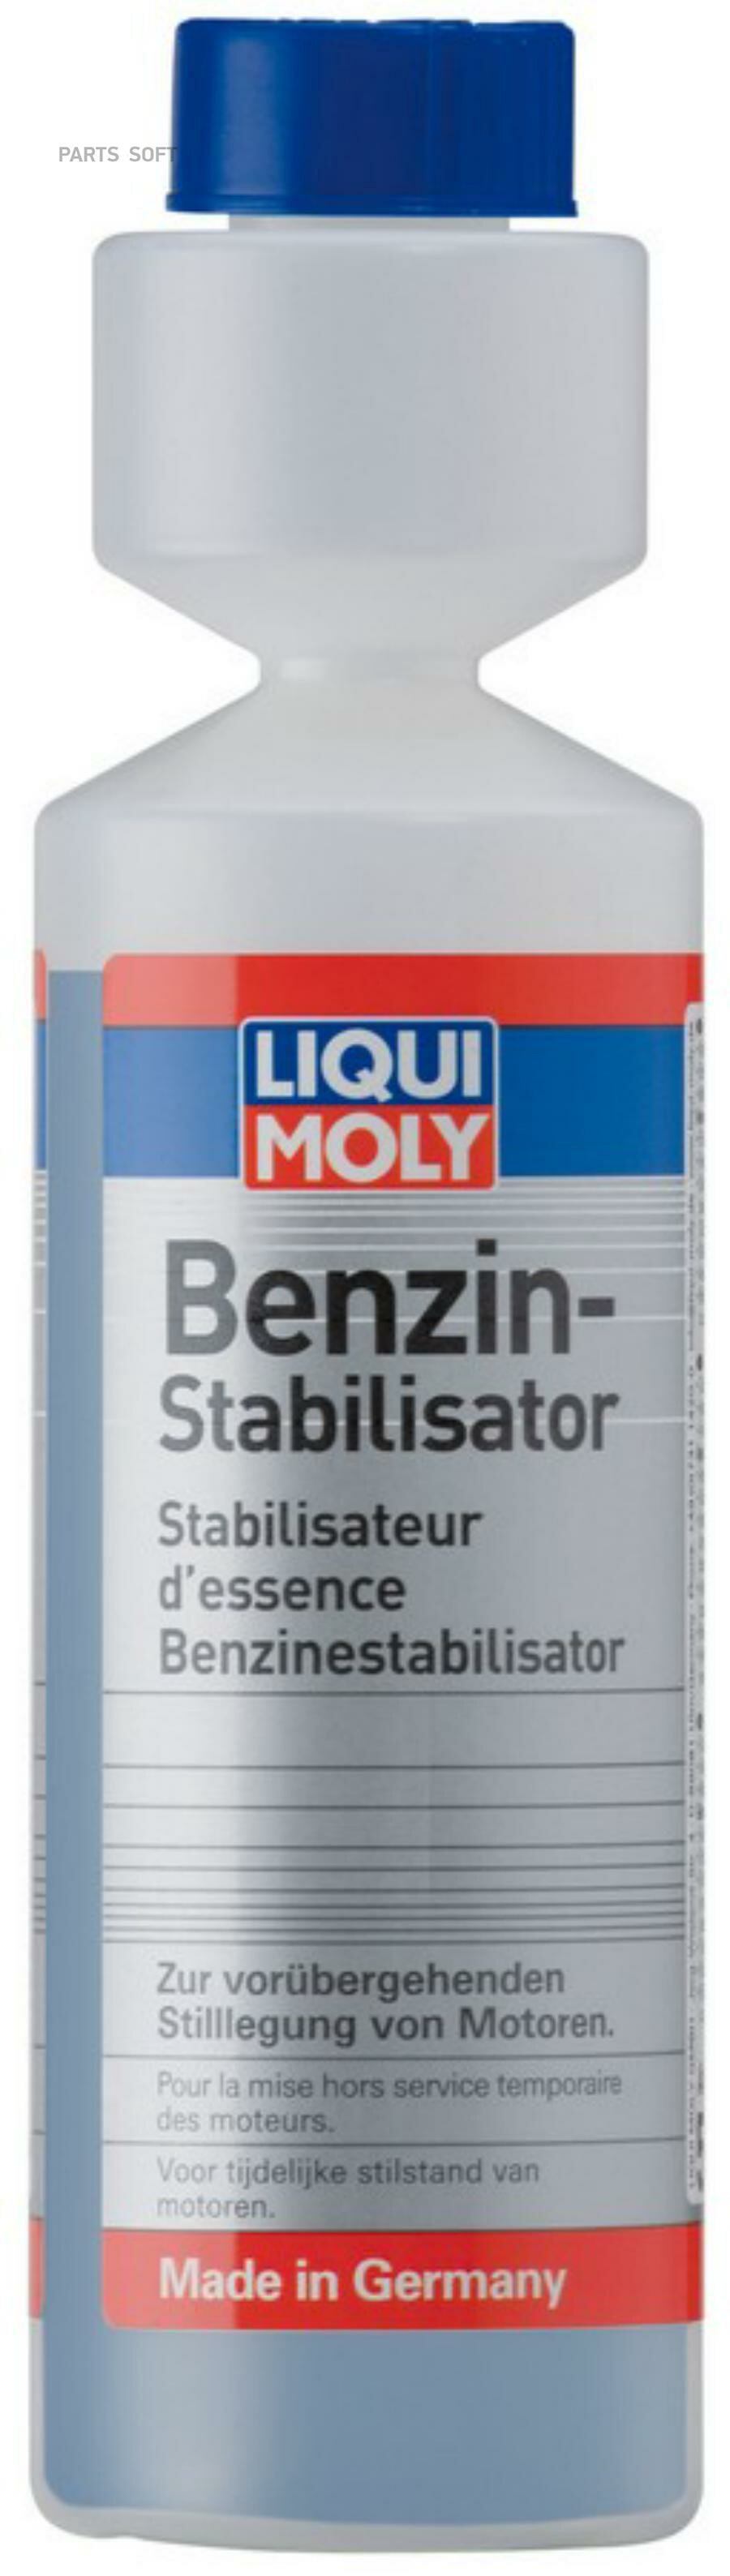 LIQUI MOLY Benzin-Stabilisator